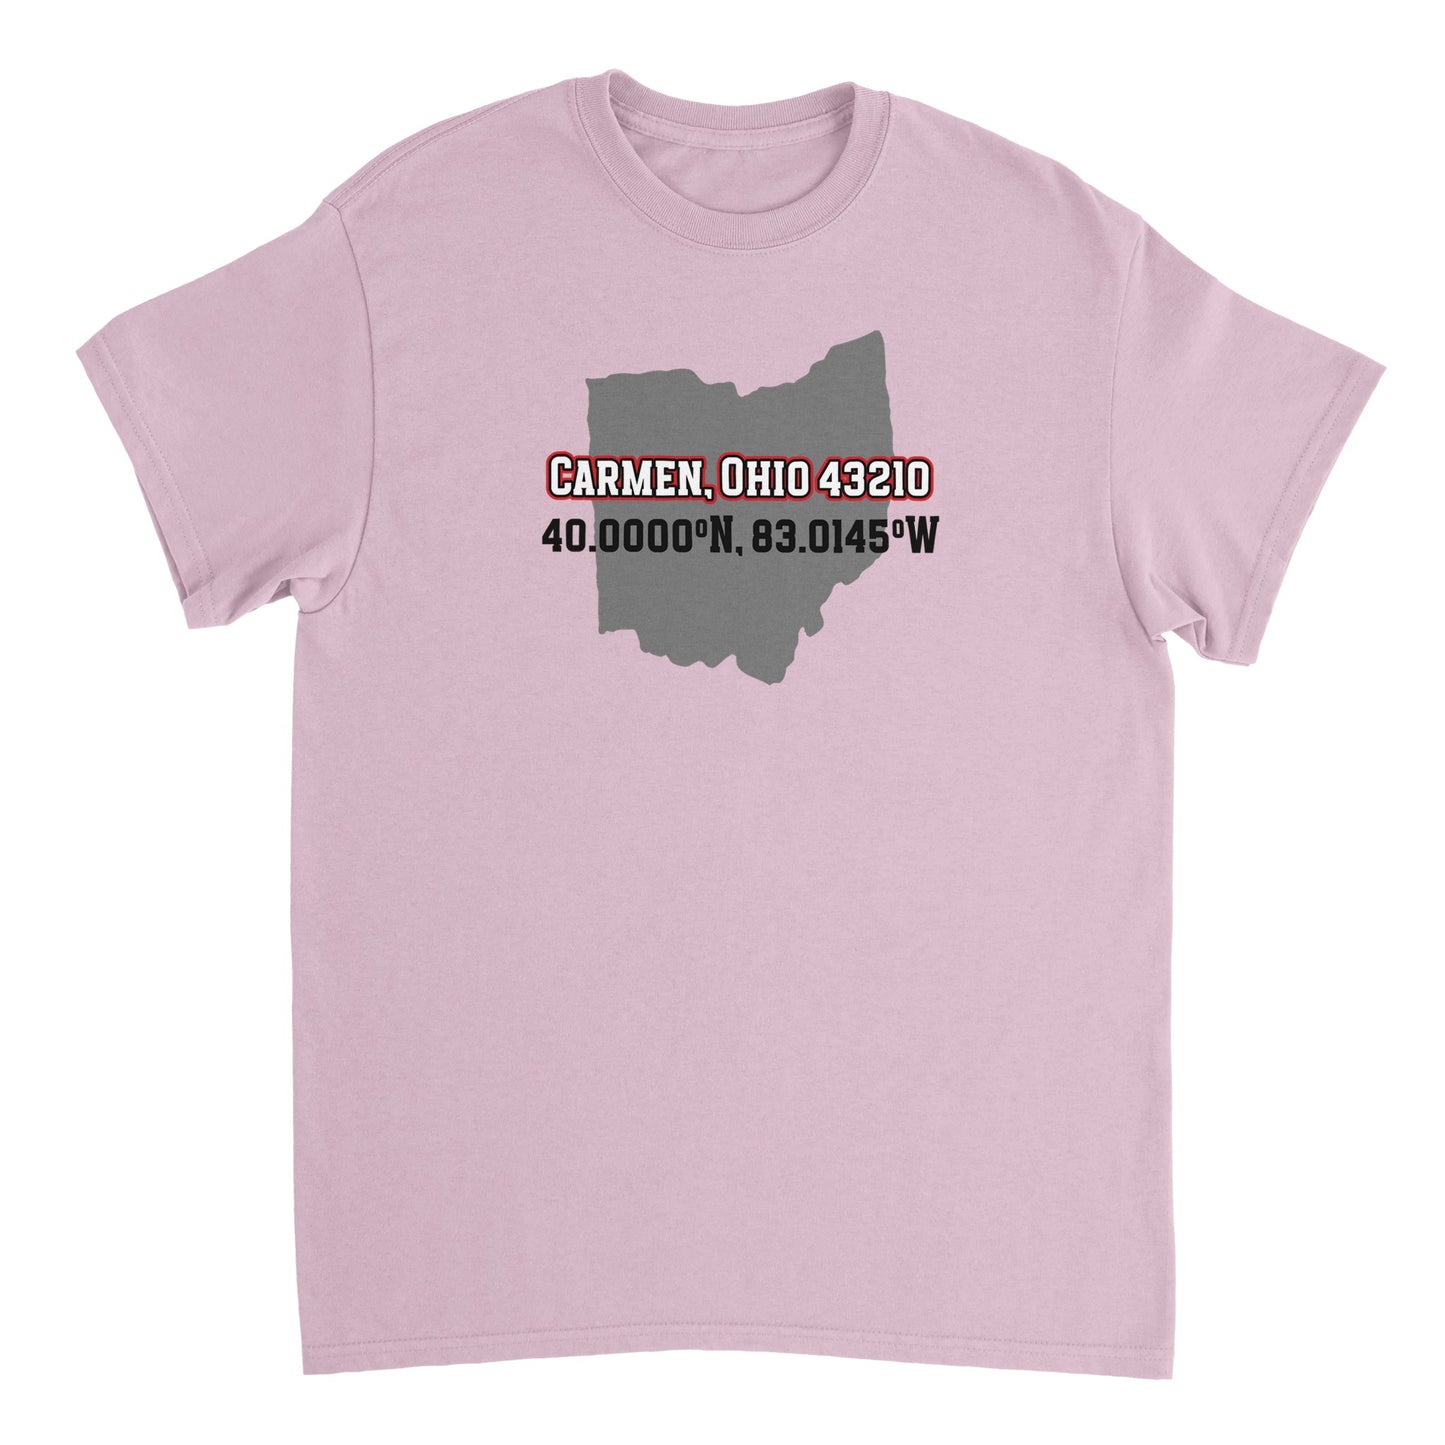 Ohio Coordinates on Heavyweight Unisex Crewneck T-shirt